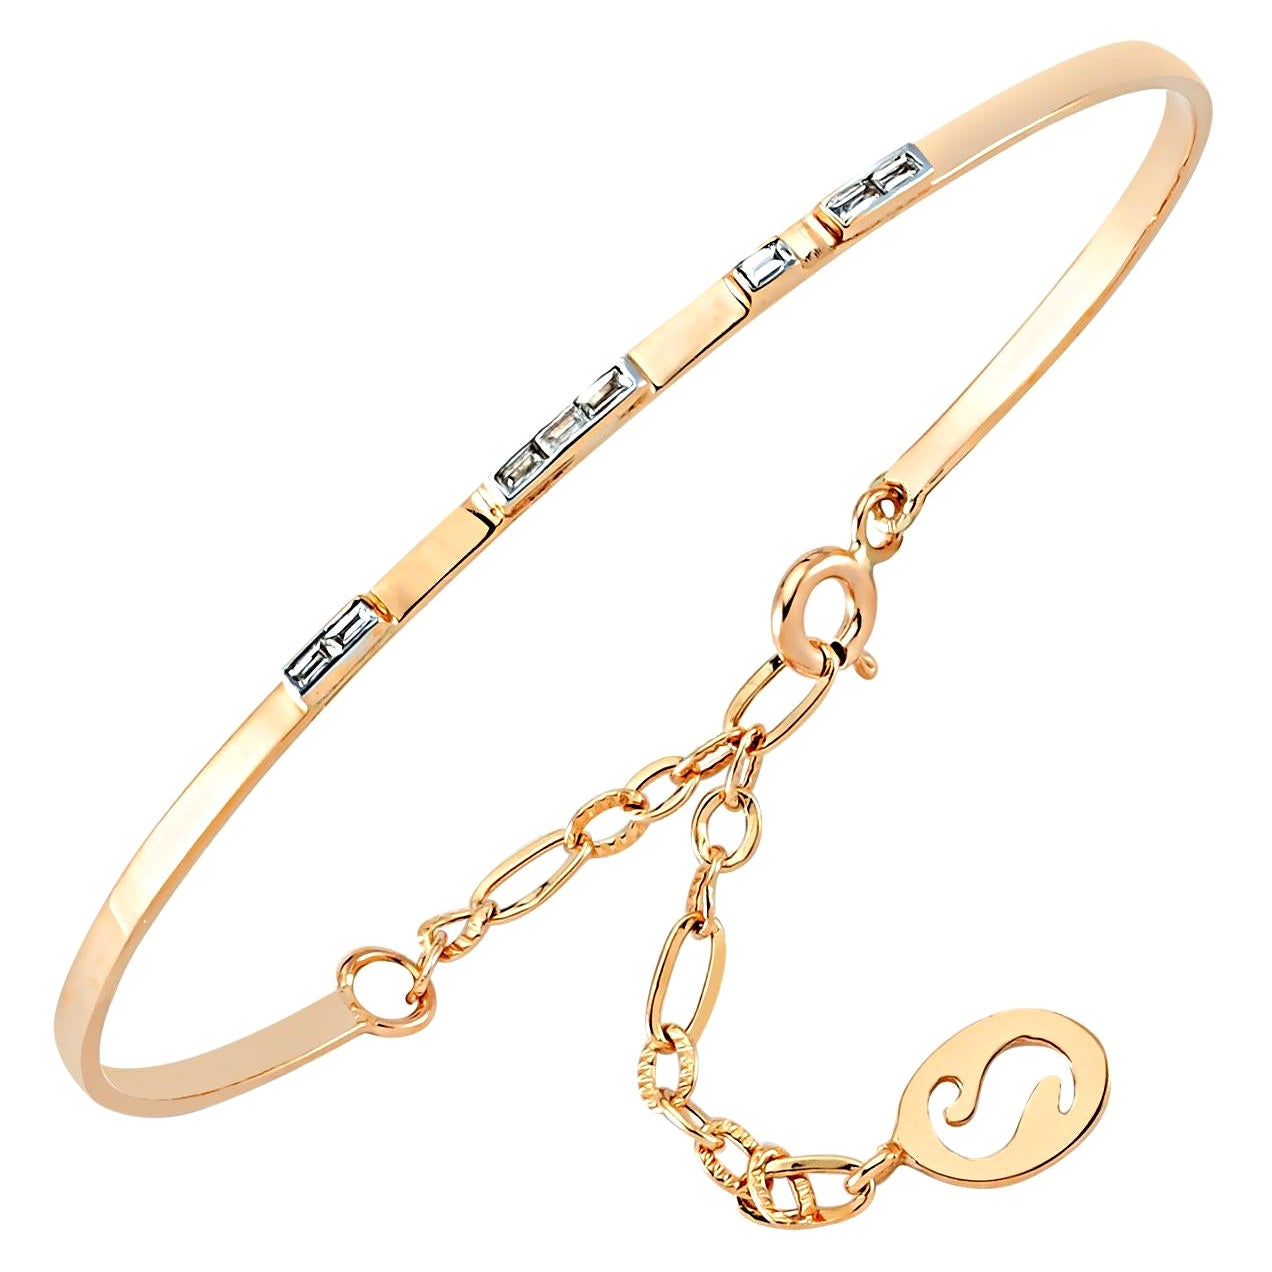 Bracelet in 14K Rose Gold with White Baguette Diamond by Selda Jewellery